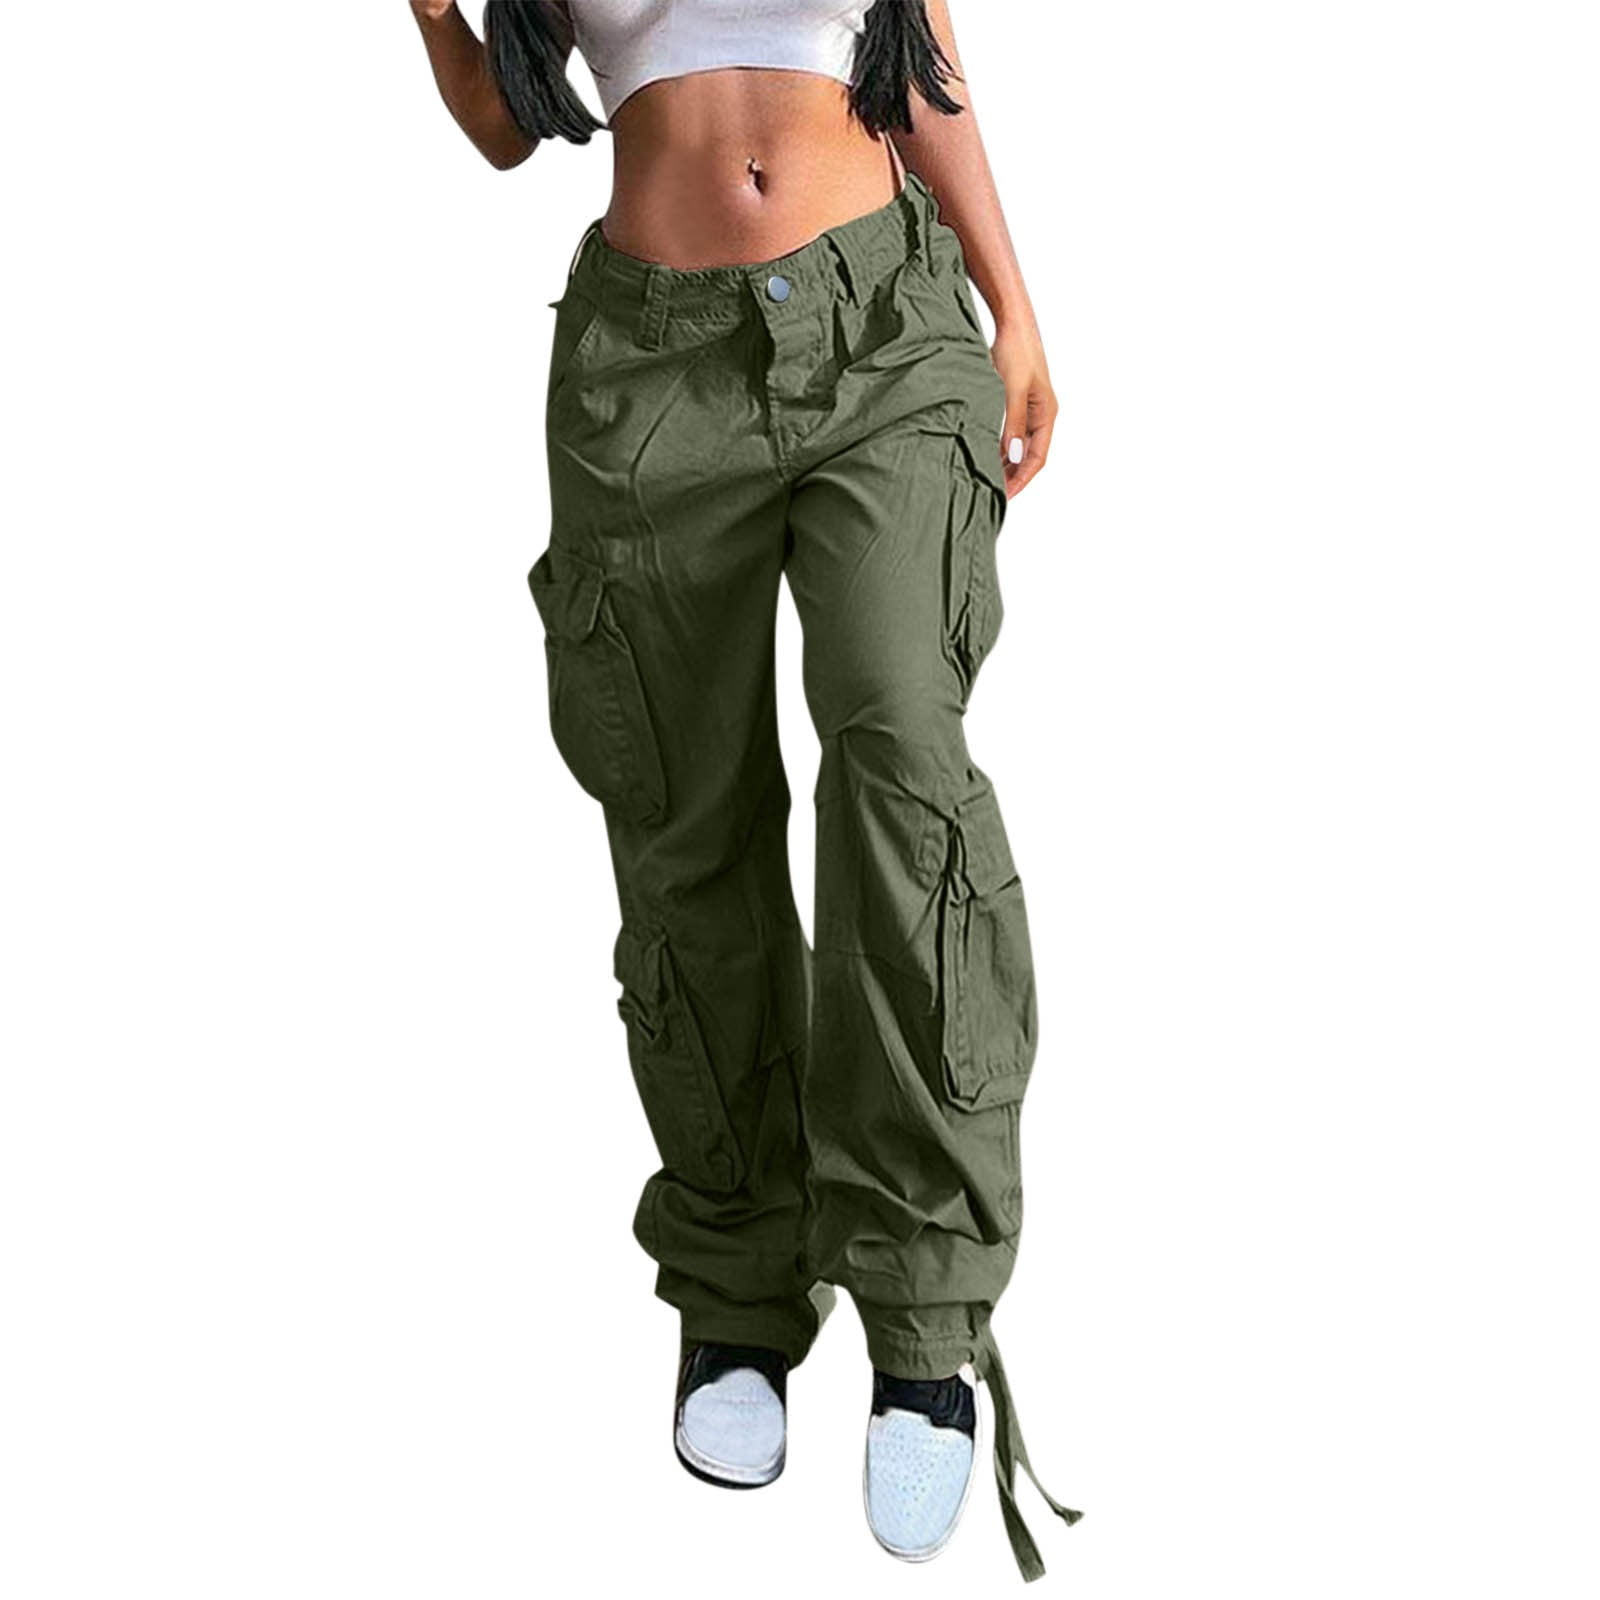 Quealent plus Size on Pants Cargo Pants Cargo Jeans Jogger Pocket Loose Fit  Straight Wide Leg Trouser Size 12 Denim Women Pants Green 2XL 